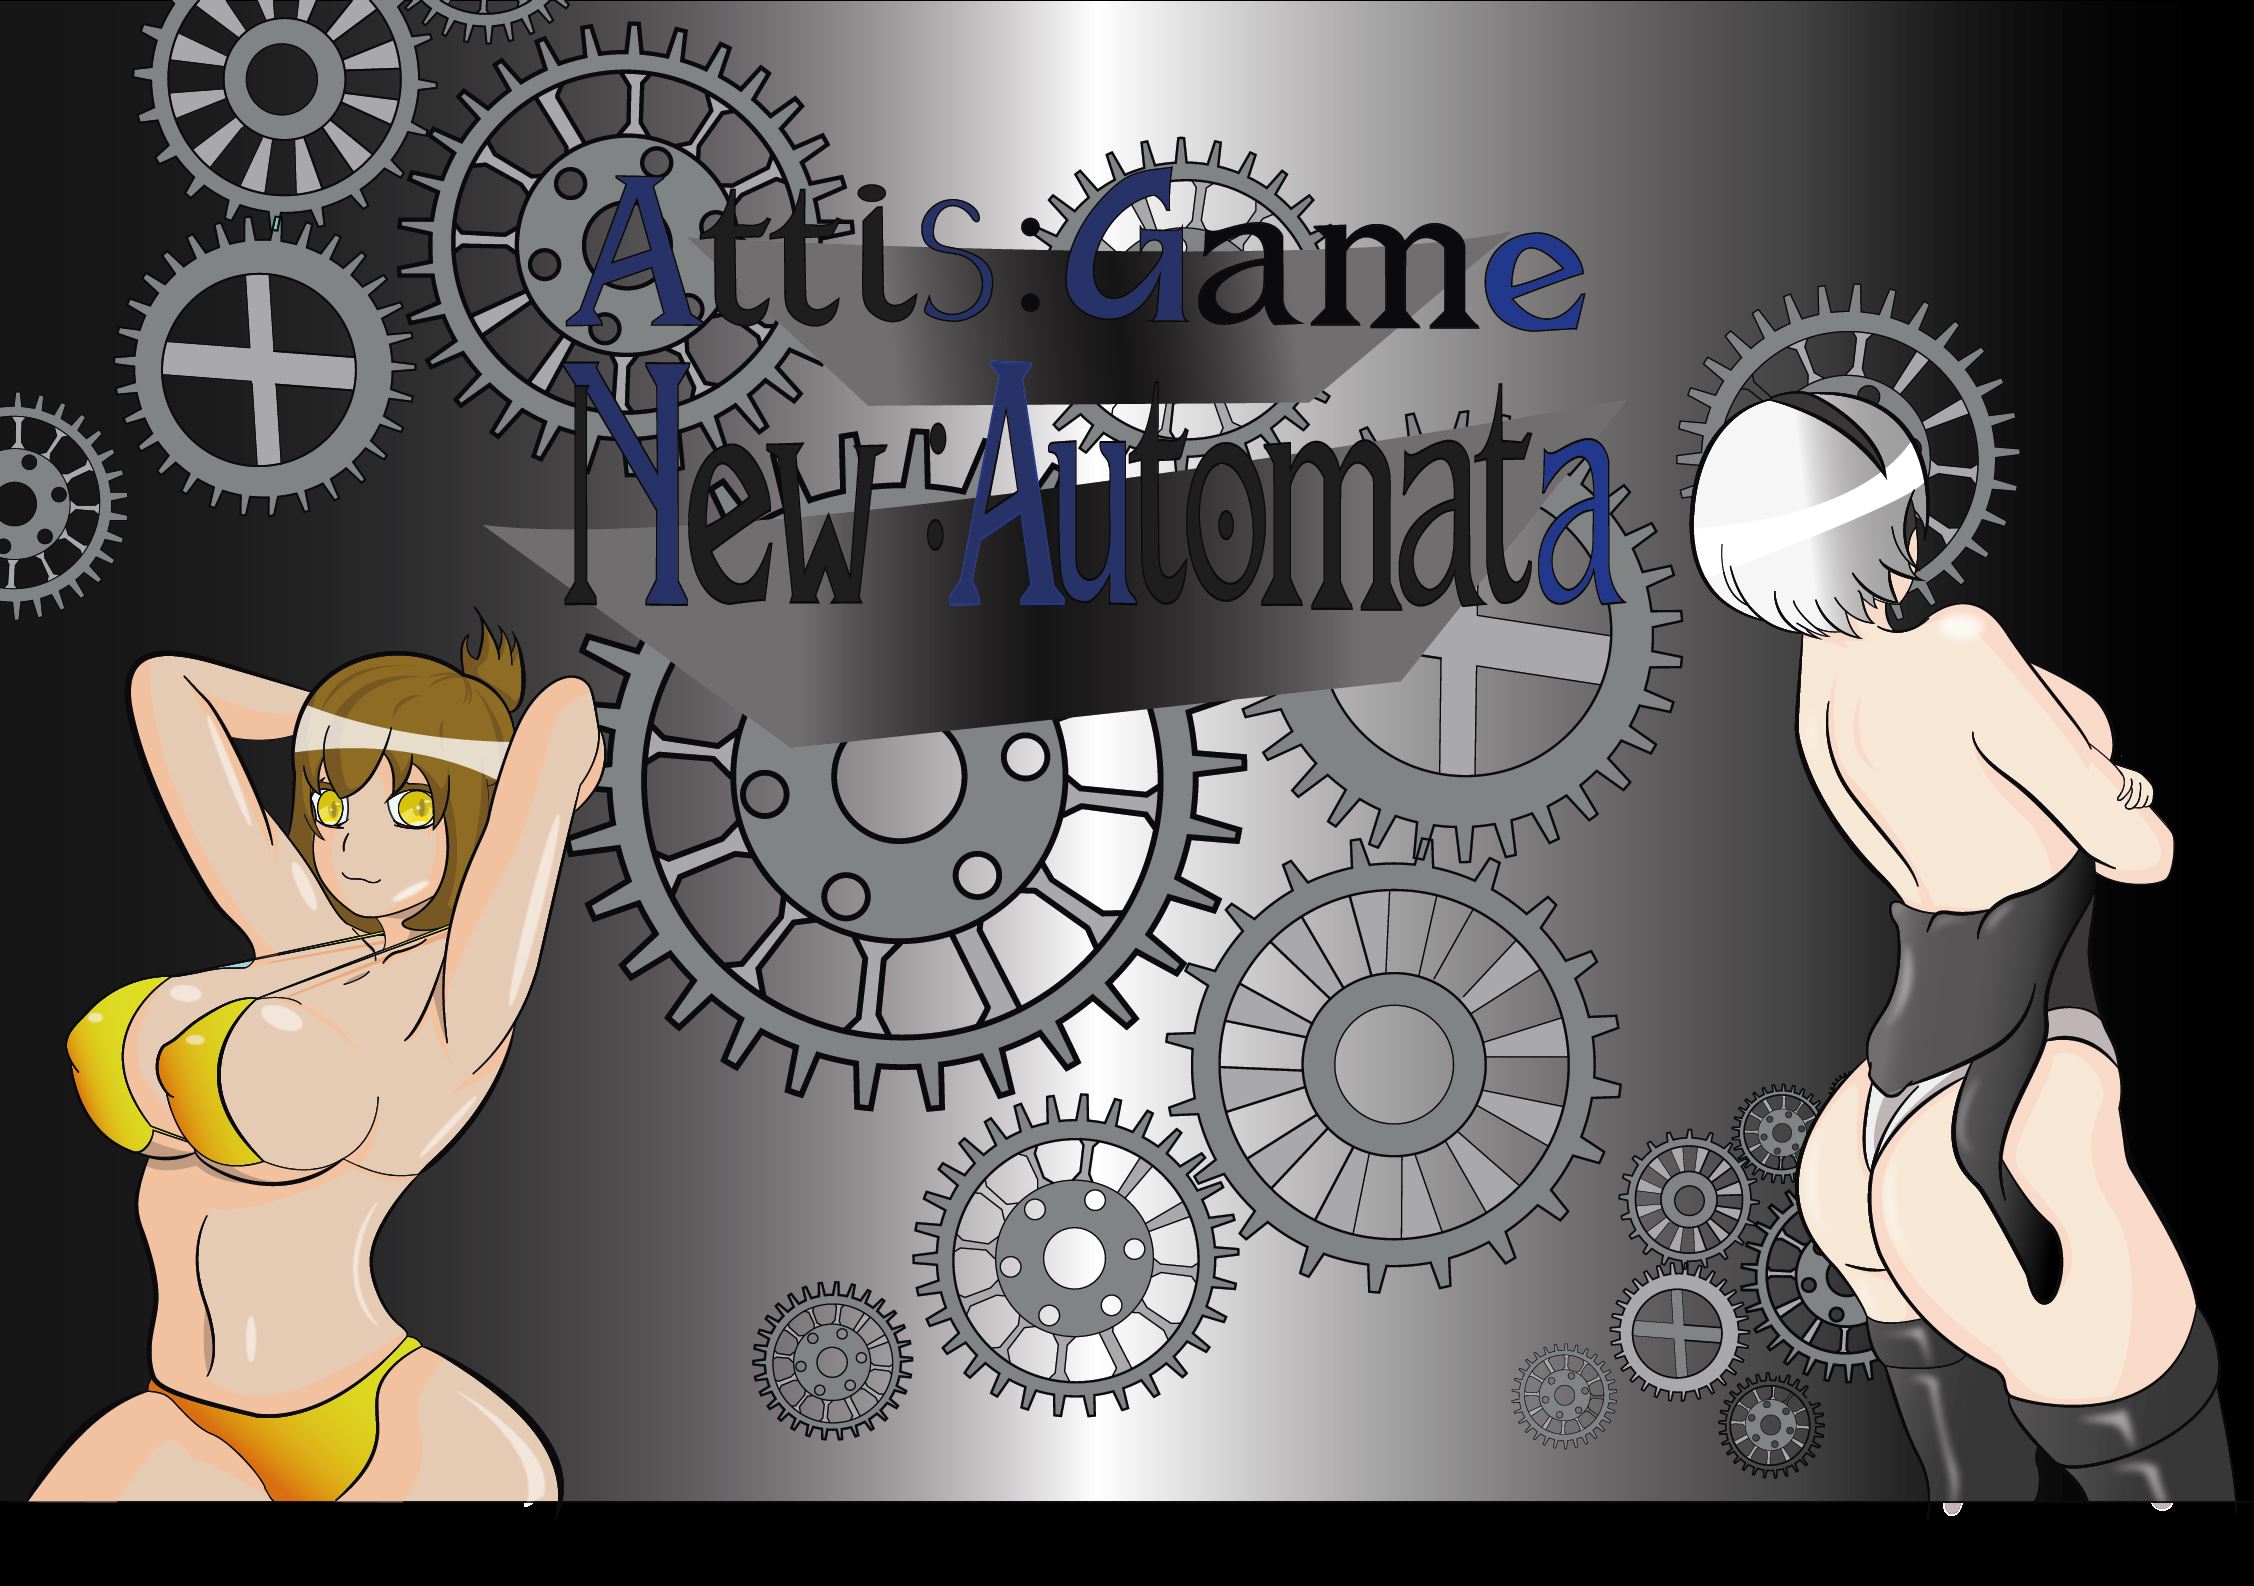 New Automata porn xxx game download cover